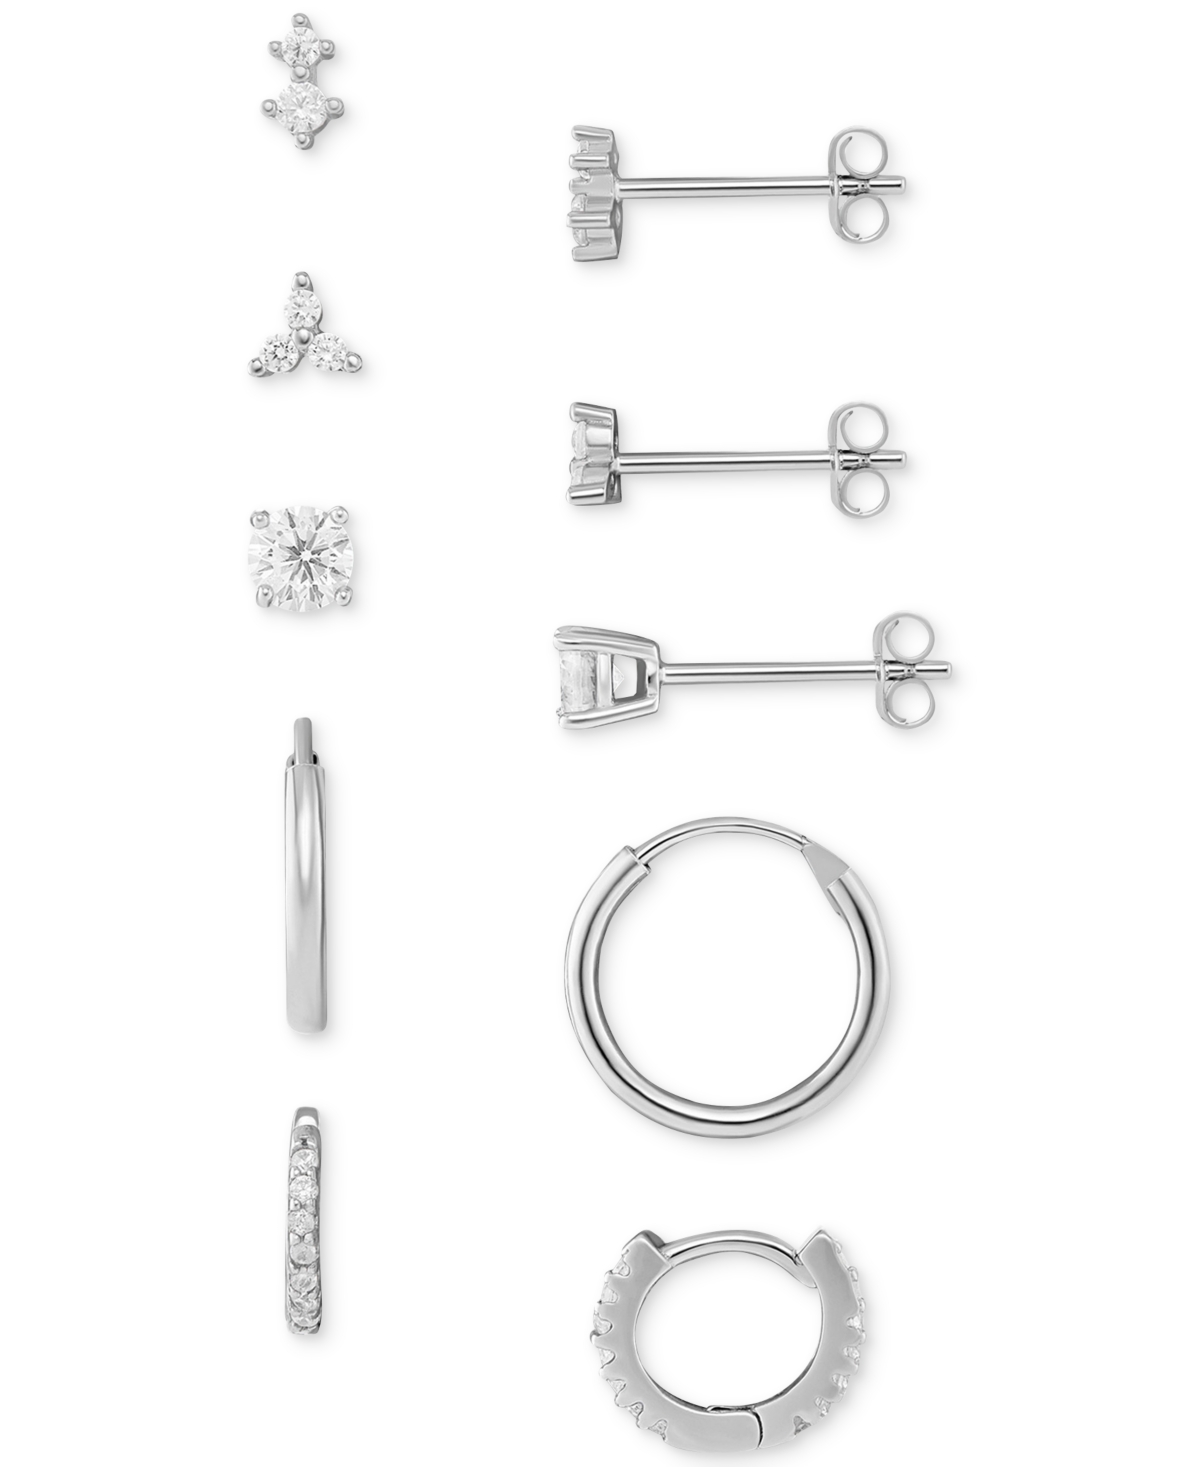 5-Pc. Set Cubic Zirconia Stud & Hoop Earrings in Sterling Silver, Created for Macy's - Sterling Silver